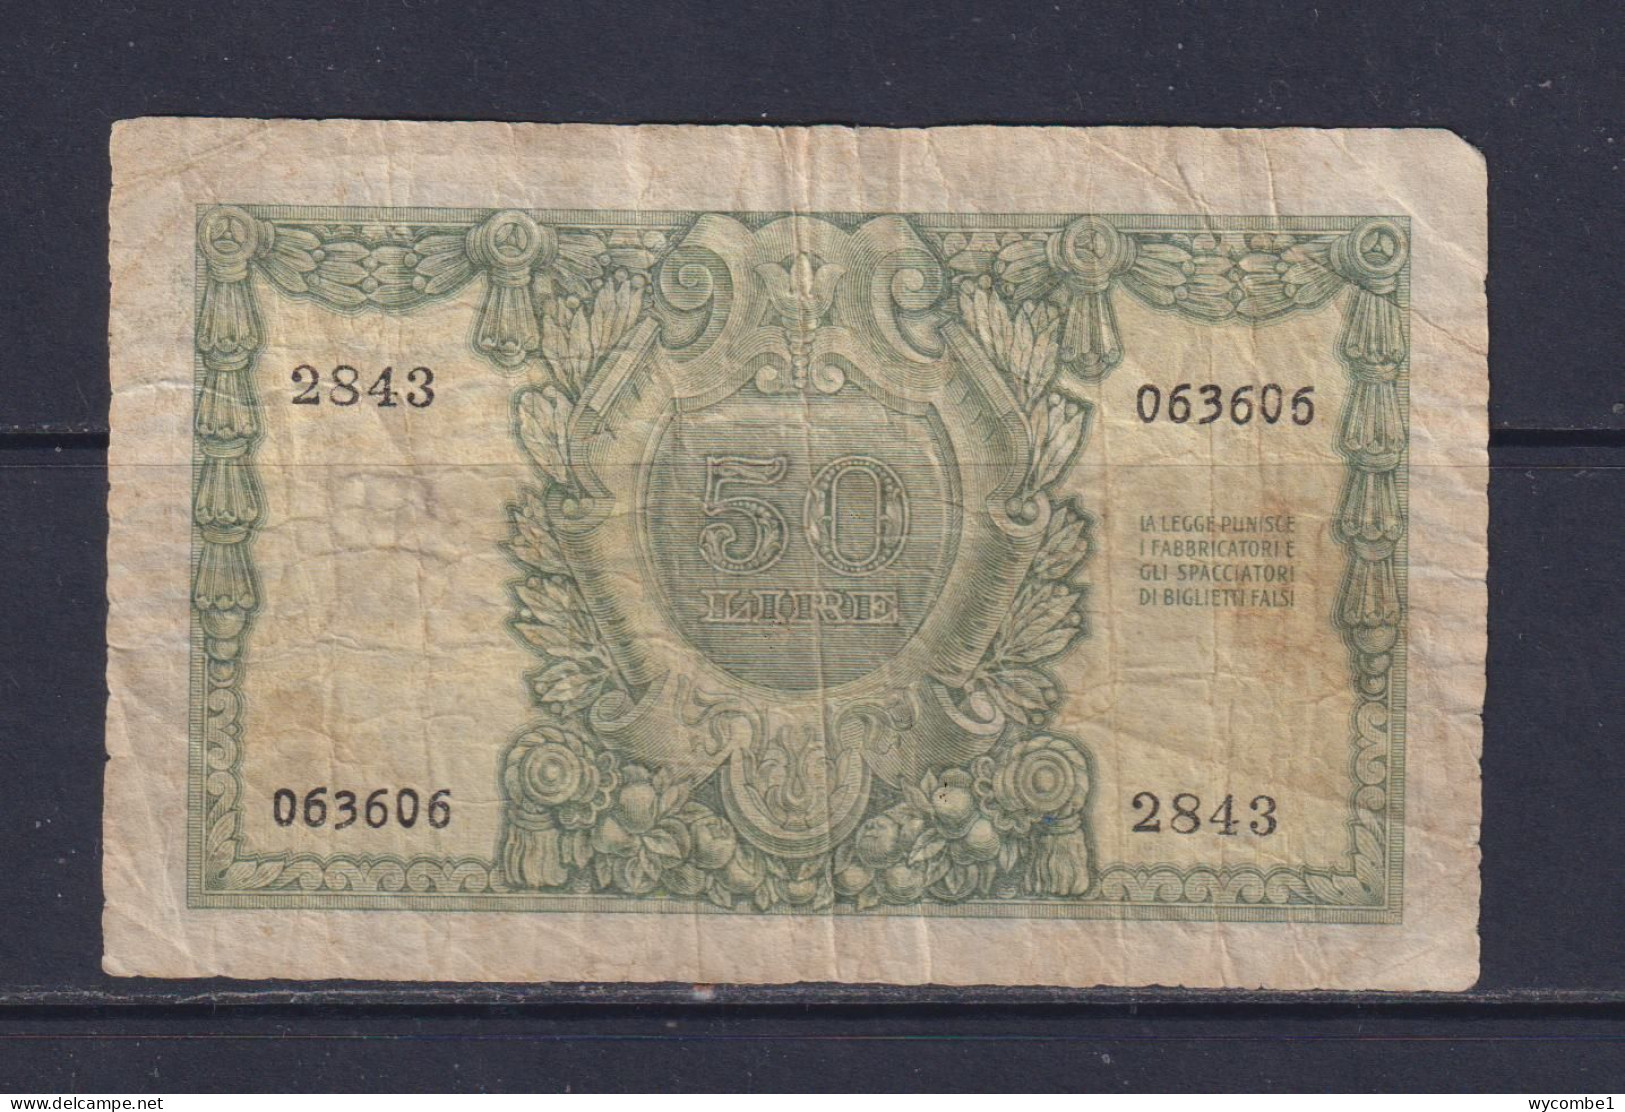 ITALY - 1951 50 Lira Circulated Banknote - 50 Lire